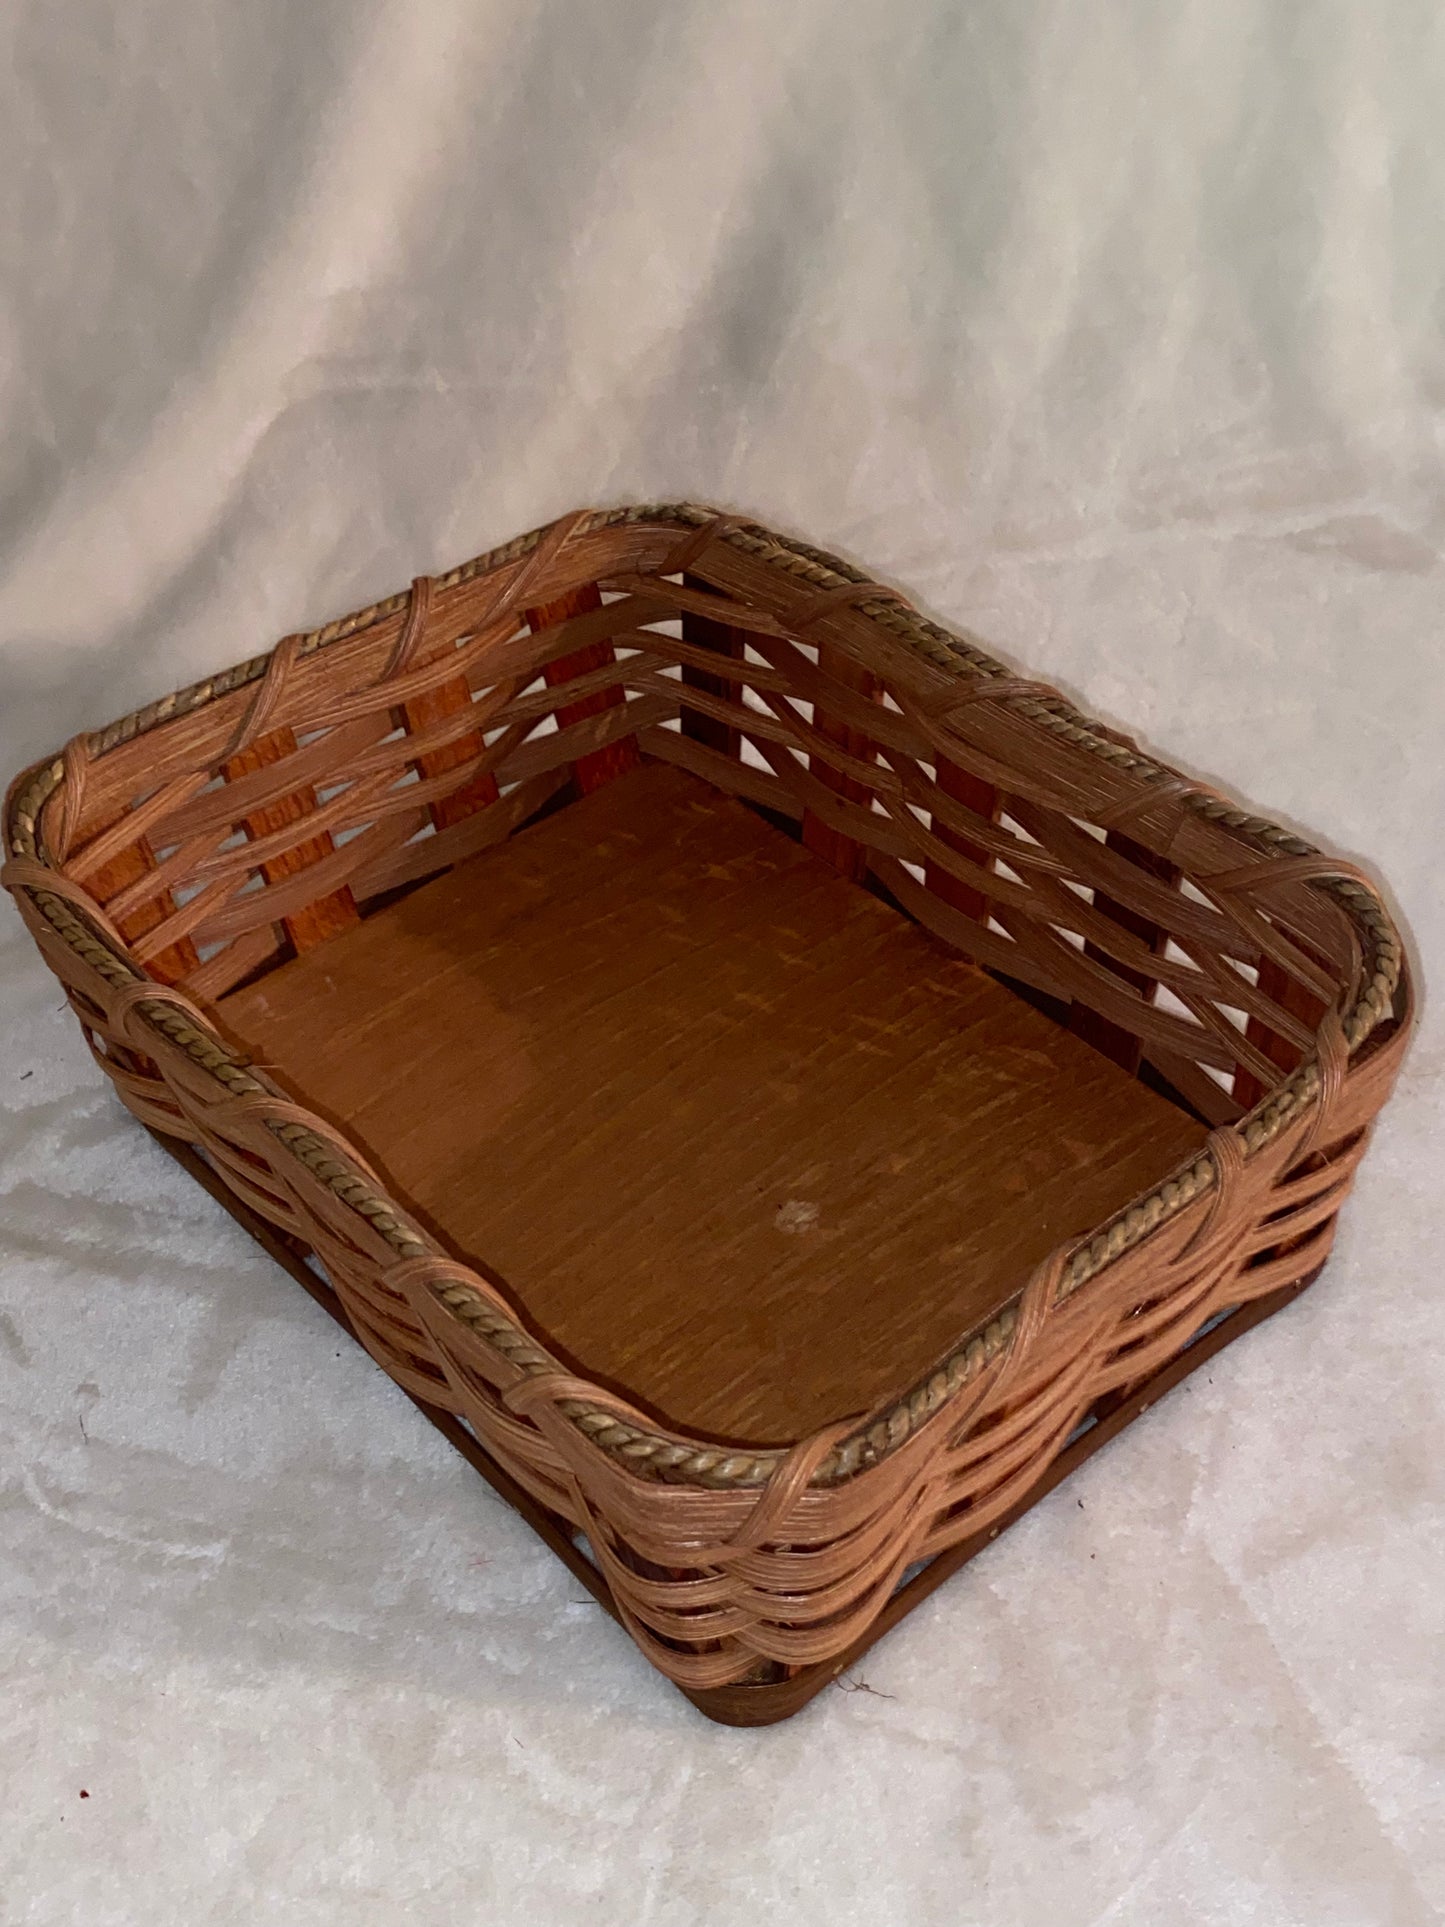 Gift Basket #2